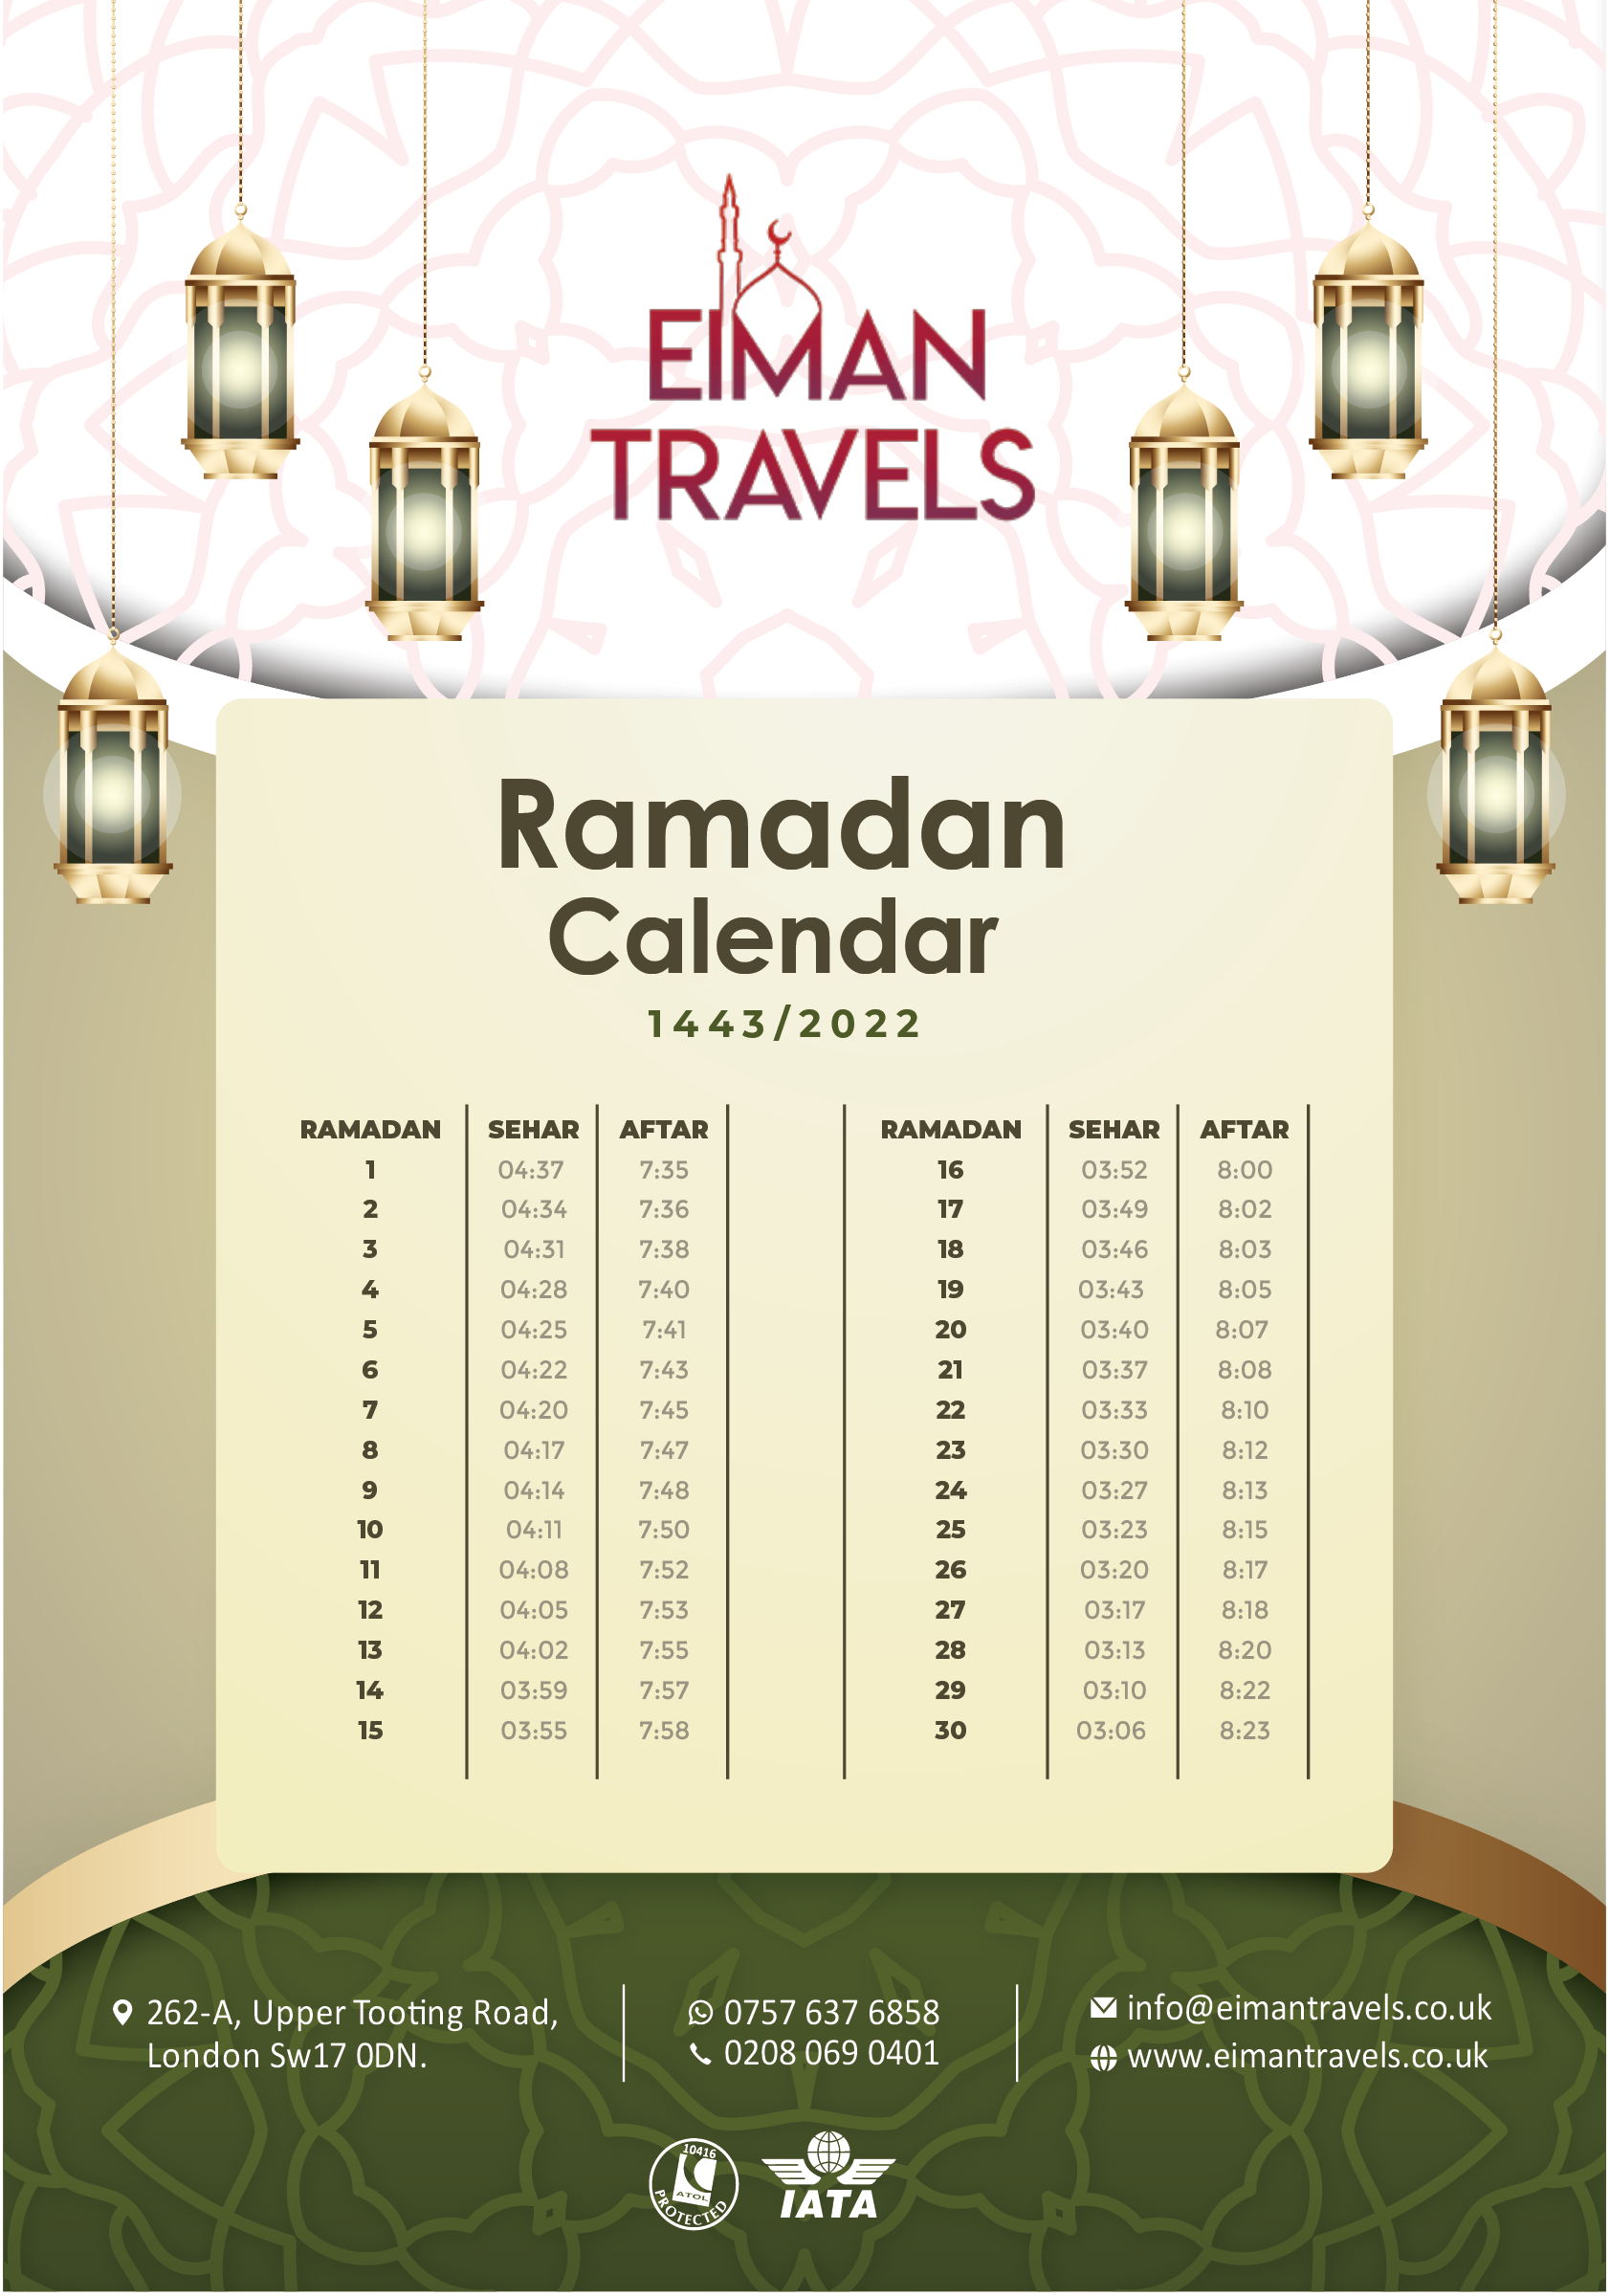 Ramadan timetable for London